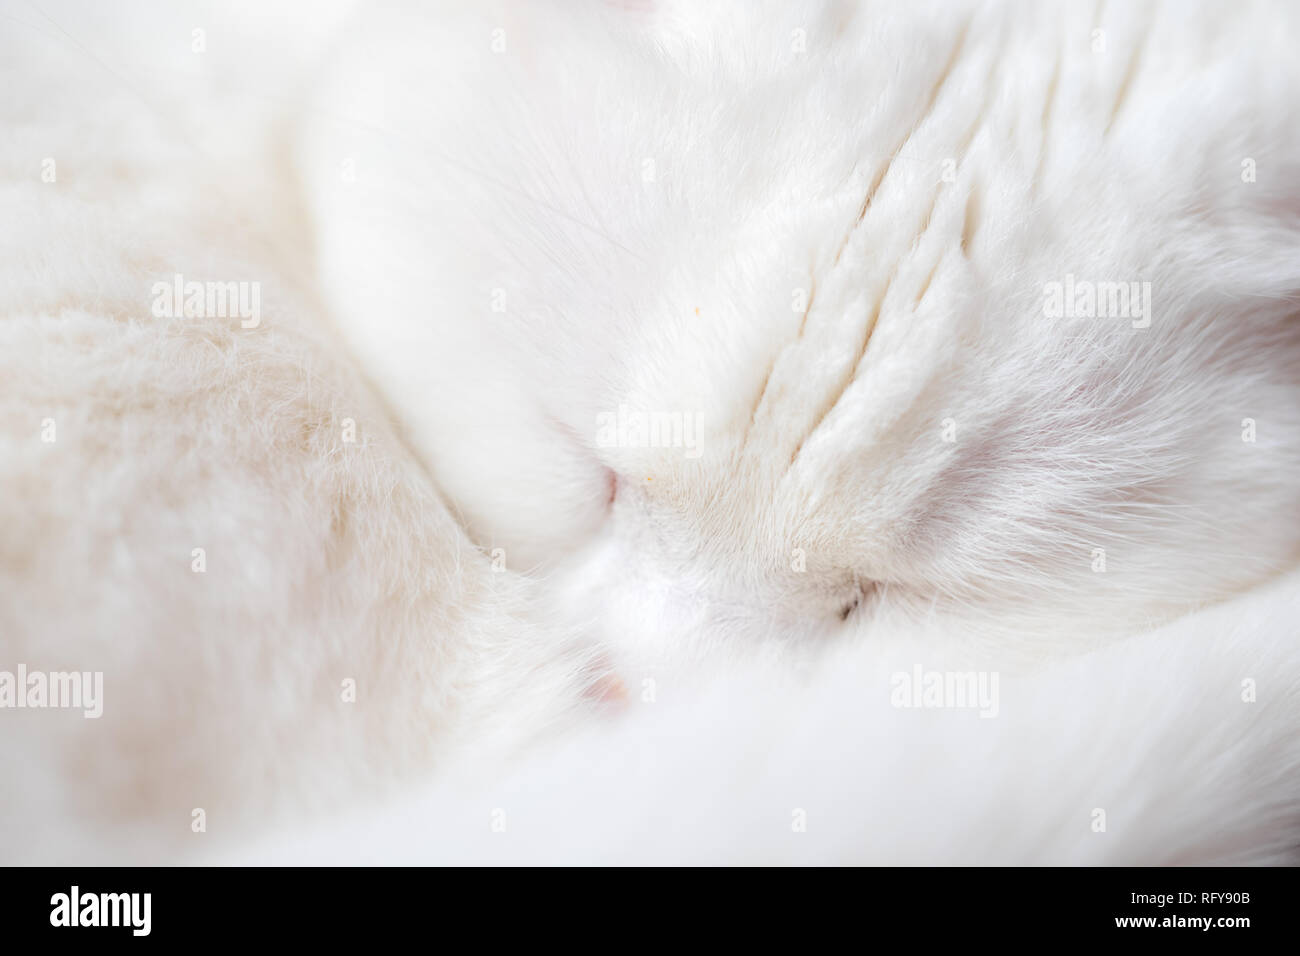 Schlafende weisse Katze - Katzen Portraits Stock Photo